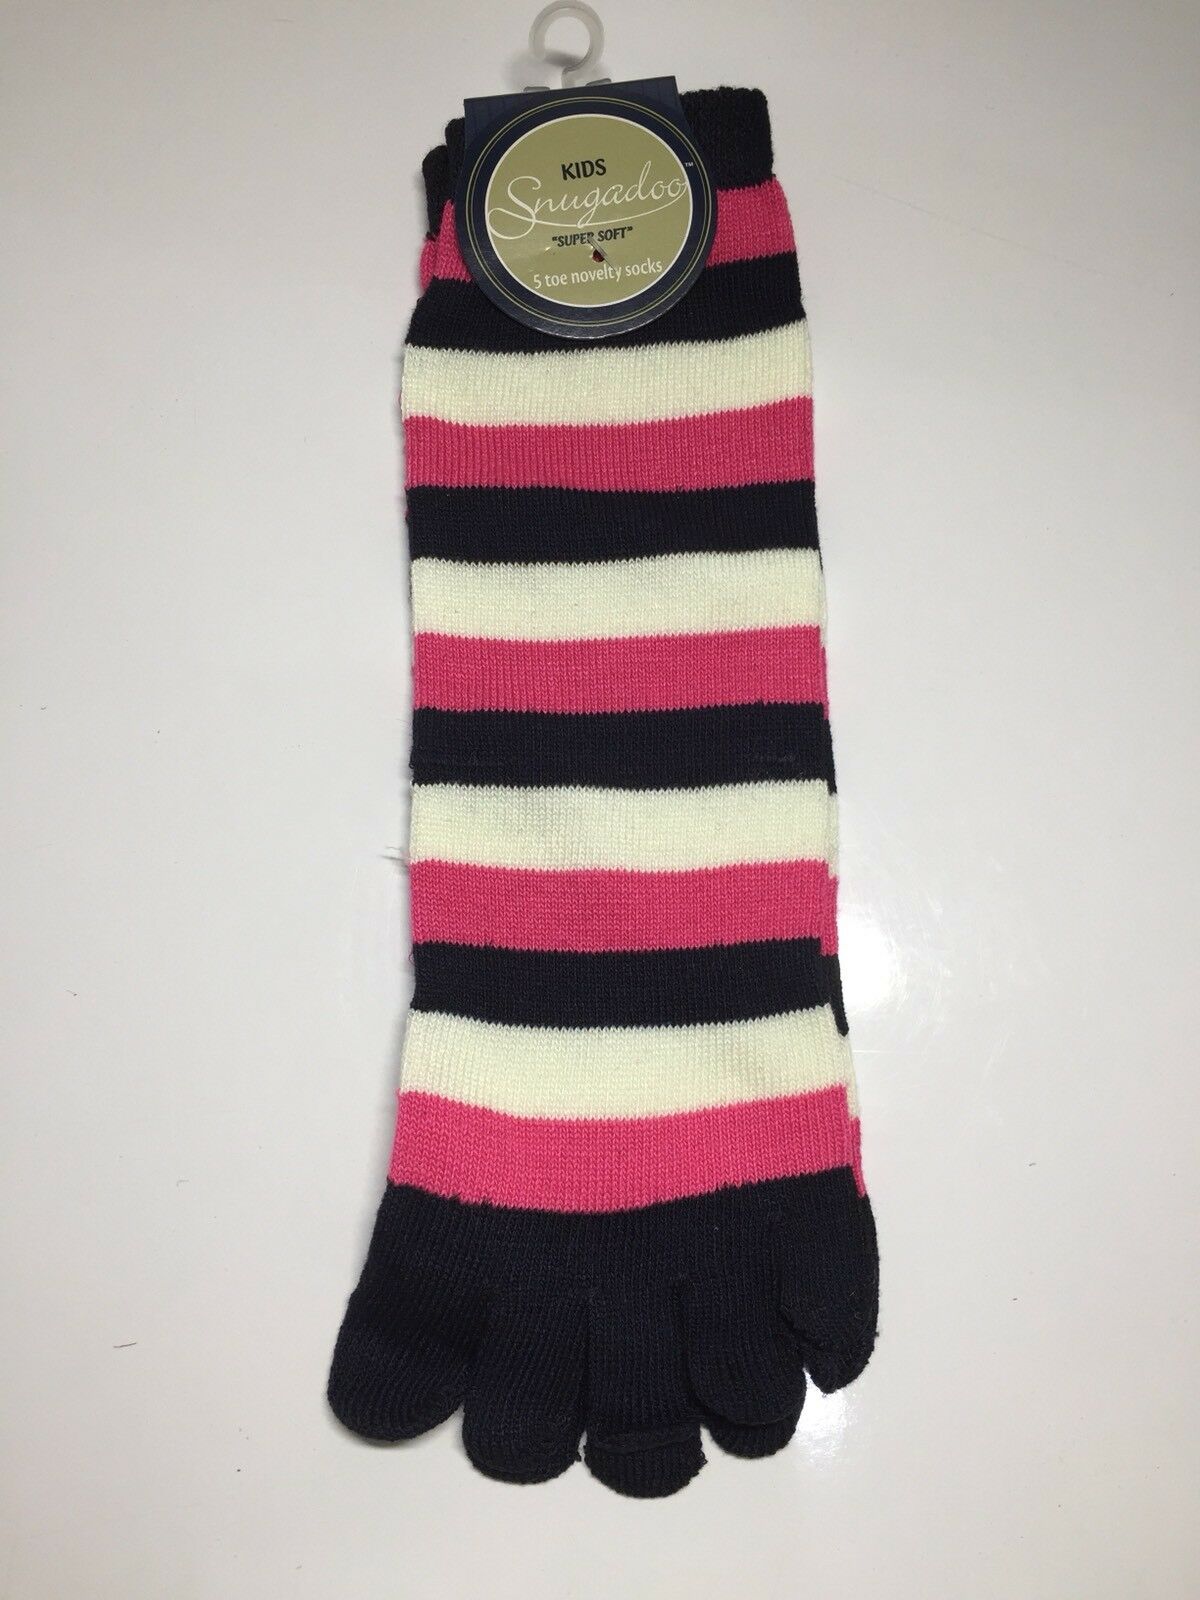 Kids Snugaloo Super Soft 5 Toe Navy White & Pink Novelty Socks RRP £2.99 CLEARANCE XL £1